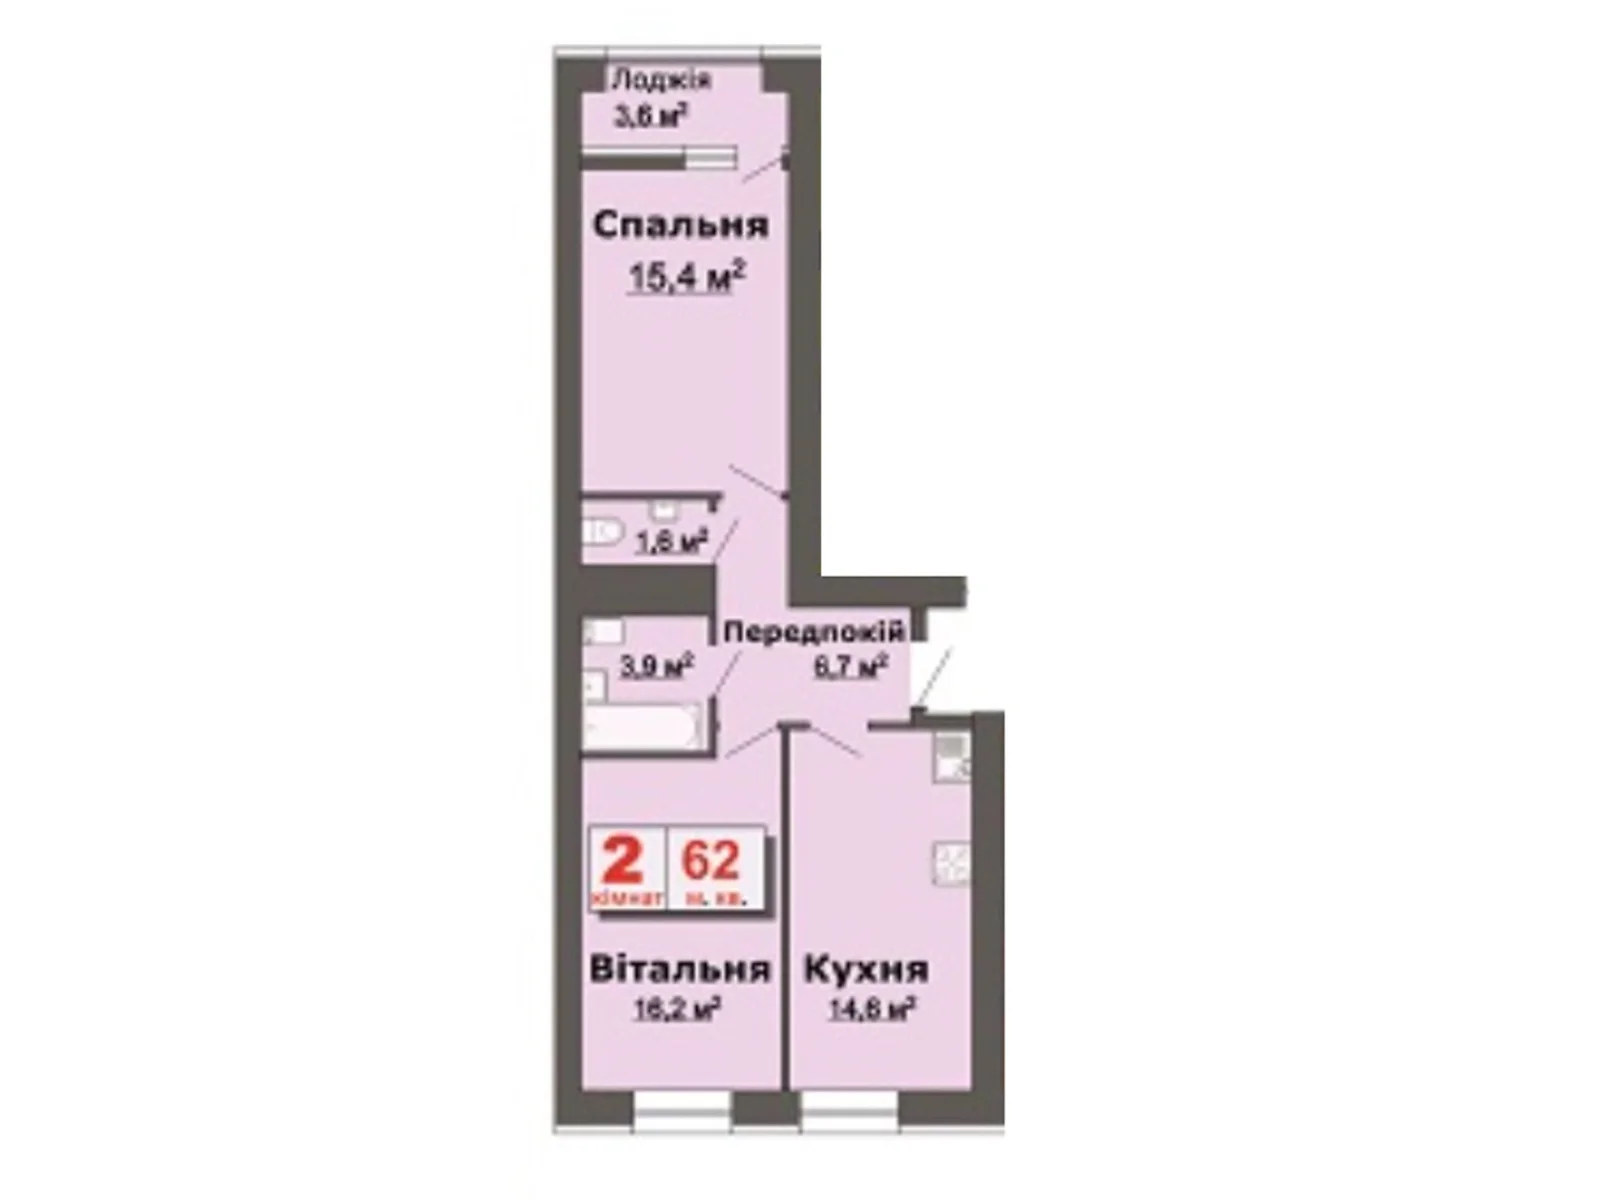 Продается 2-комнатная квартира 62 кв. м в Змиенце, цена: 52927 $